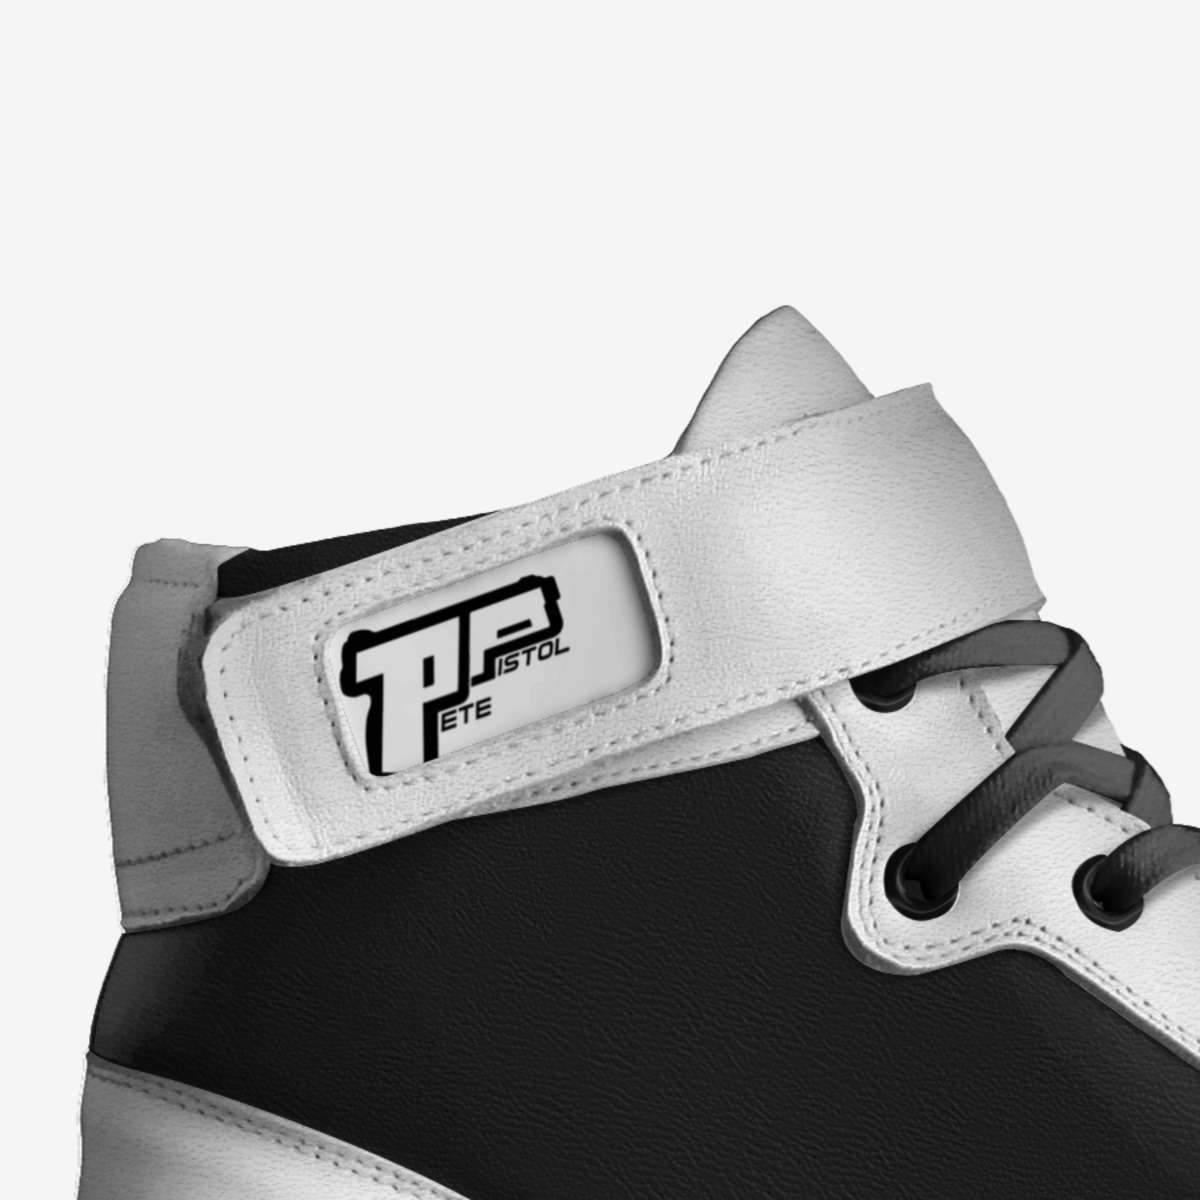 PISTOL PETE | A Custom Shoe concept by Pete Rollock